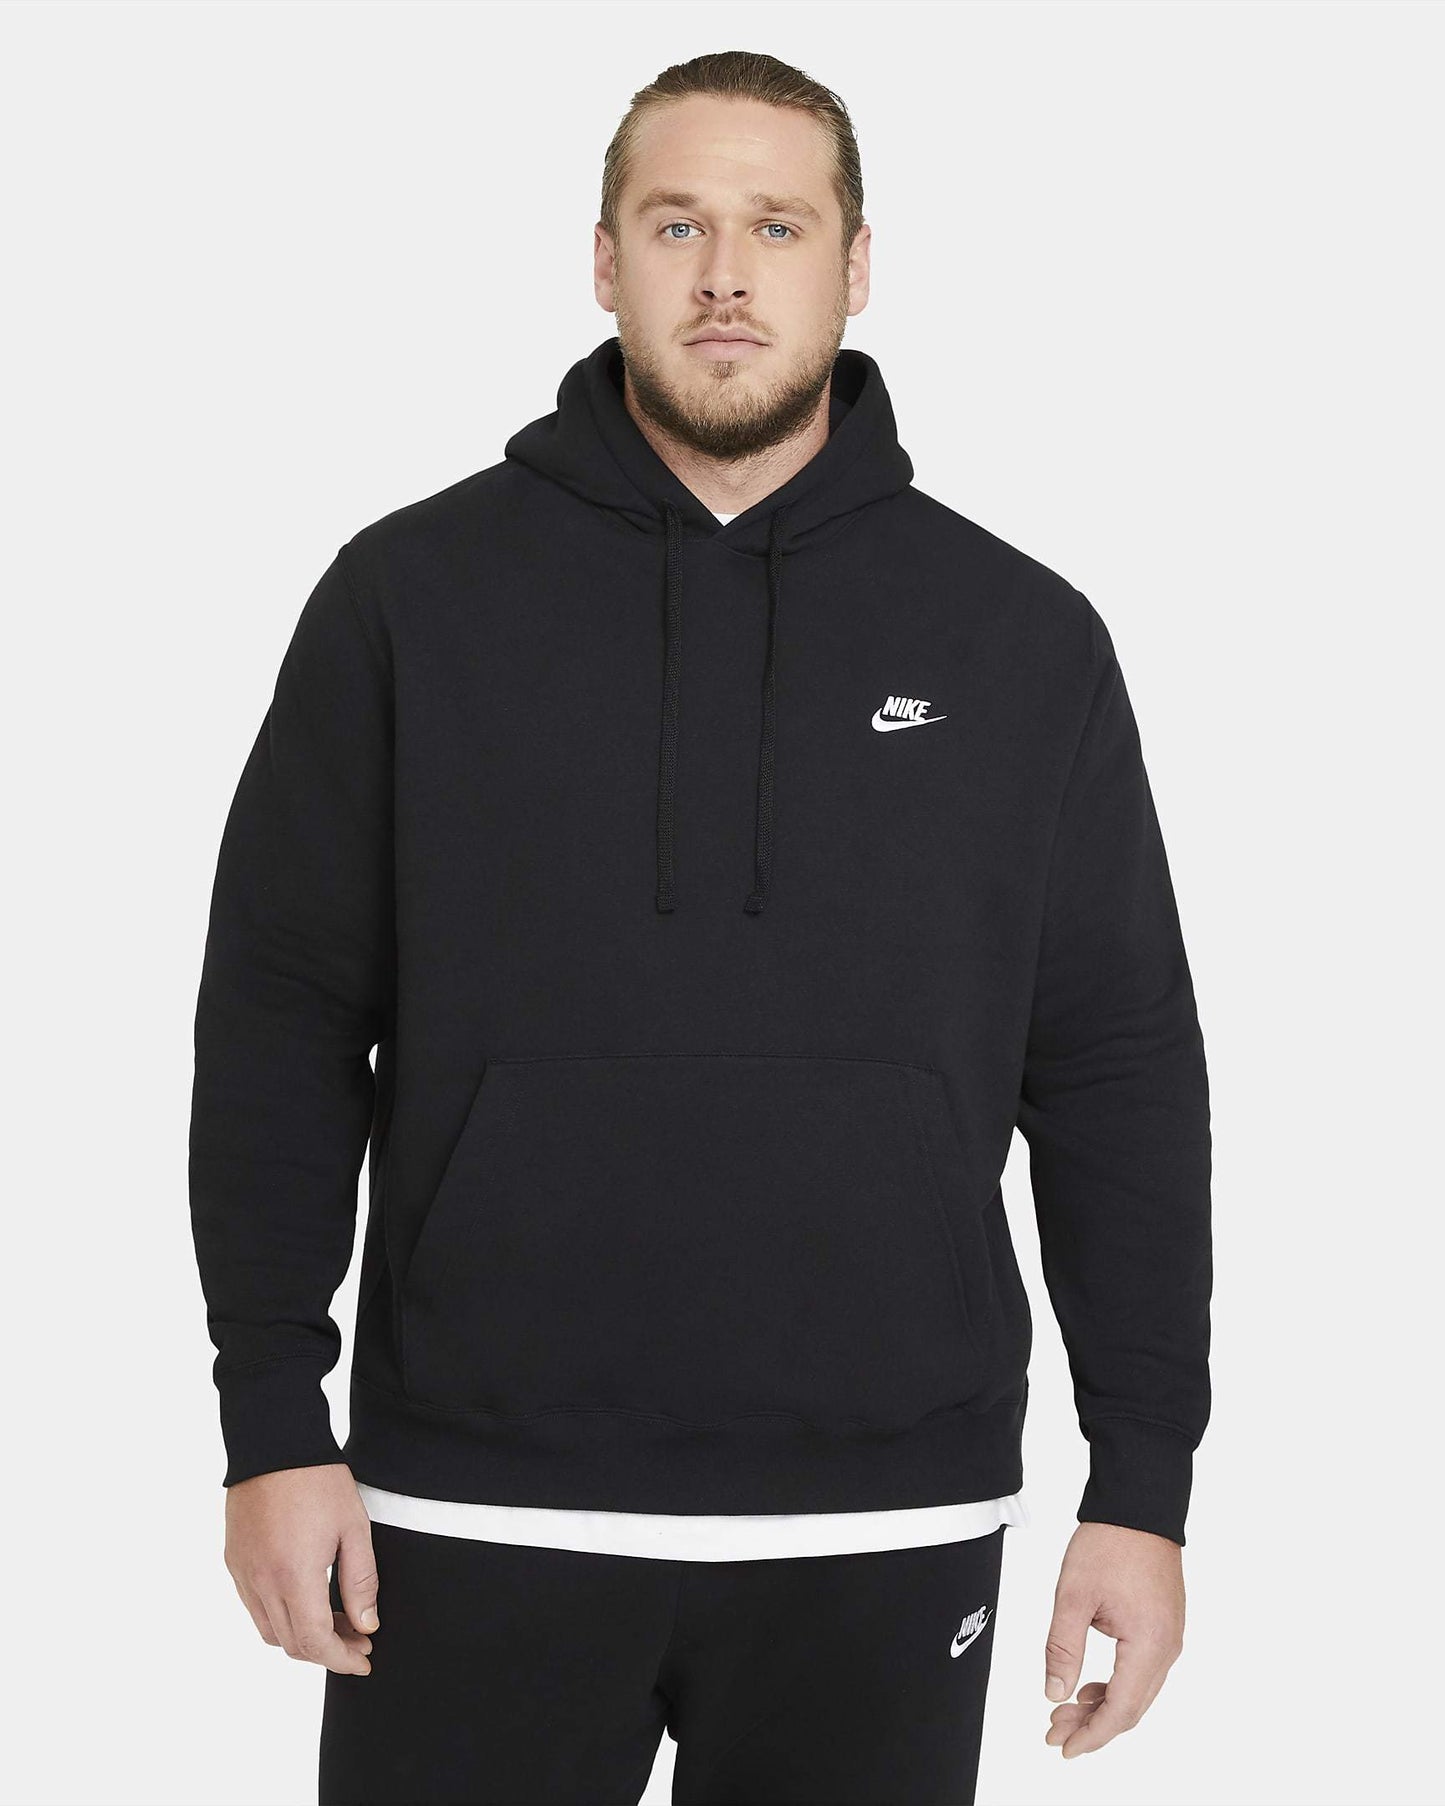 Nike Mens Tops Small / Black Pullover Hoodie